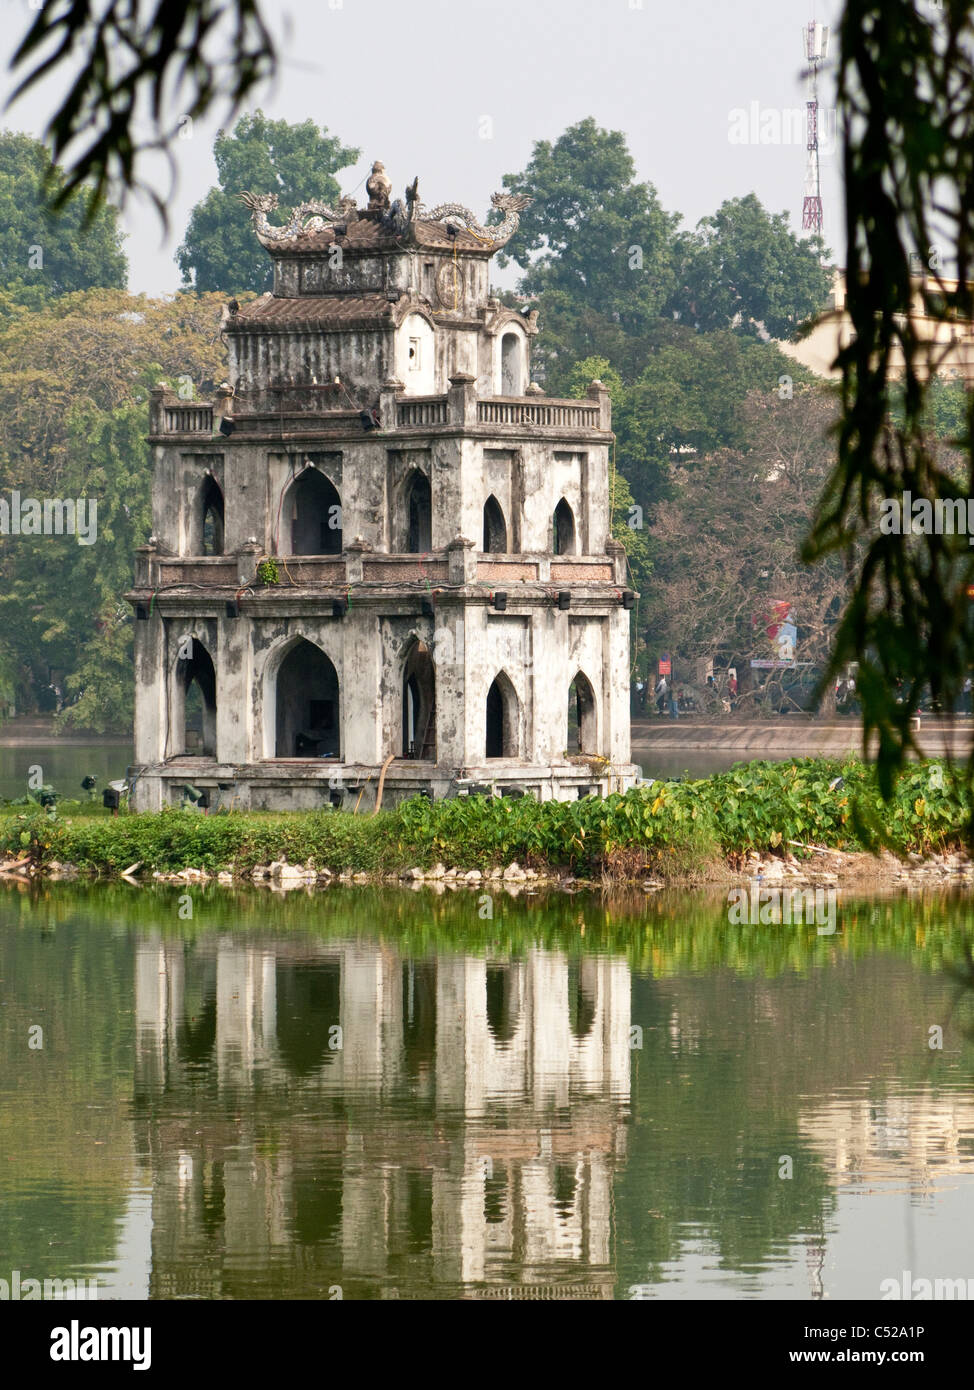 The historic Tortoise Tower, Thap Rua, reflected in the waters of Hoan Kiem Lake, Hanoi, Vietnam Stock Photo